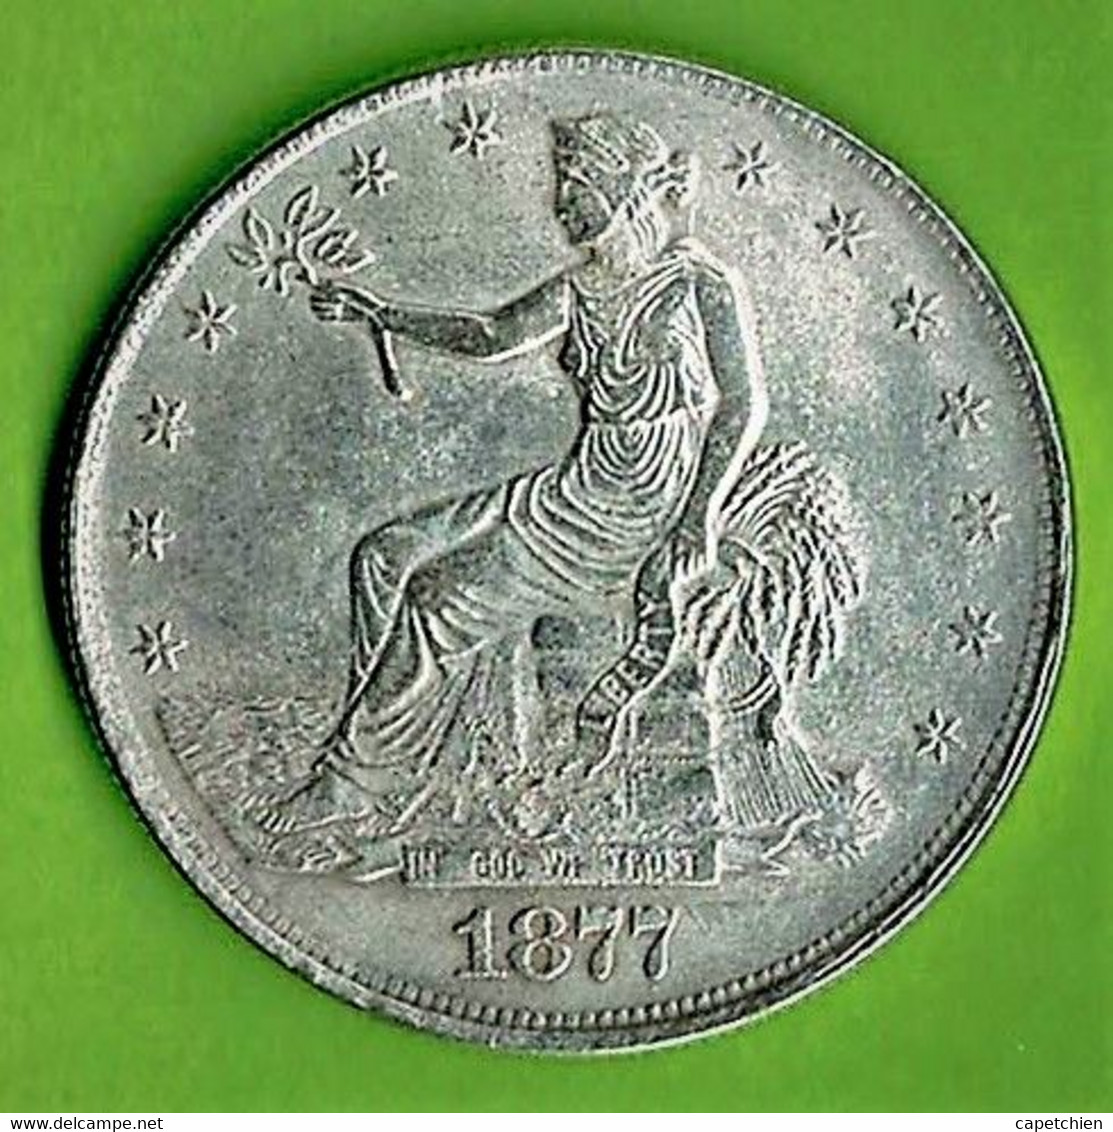 USA / 1 DOLLAR / 1877 / FAUX ( D'origine Asiatique ) ) FALSCHGELD / FAKE COIN - 1873-1885: Trade Dollars (Dollaro Da Commercio)